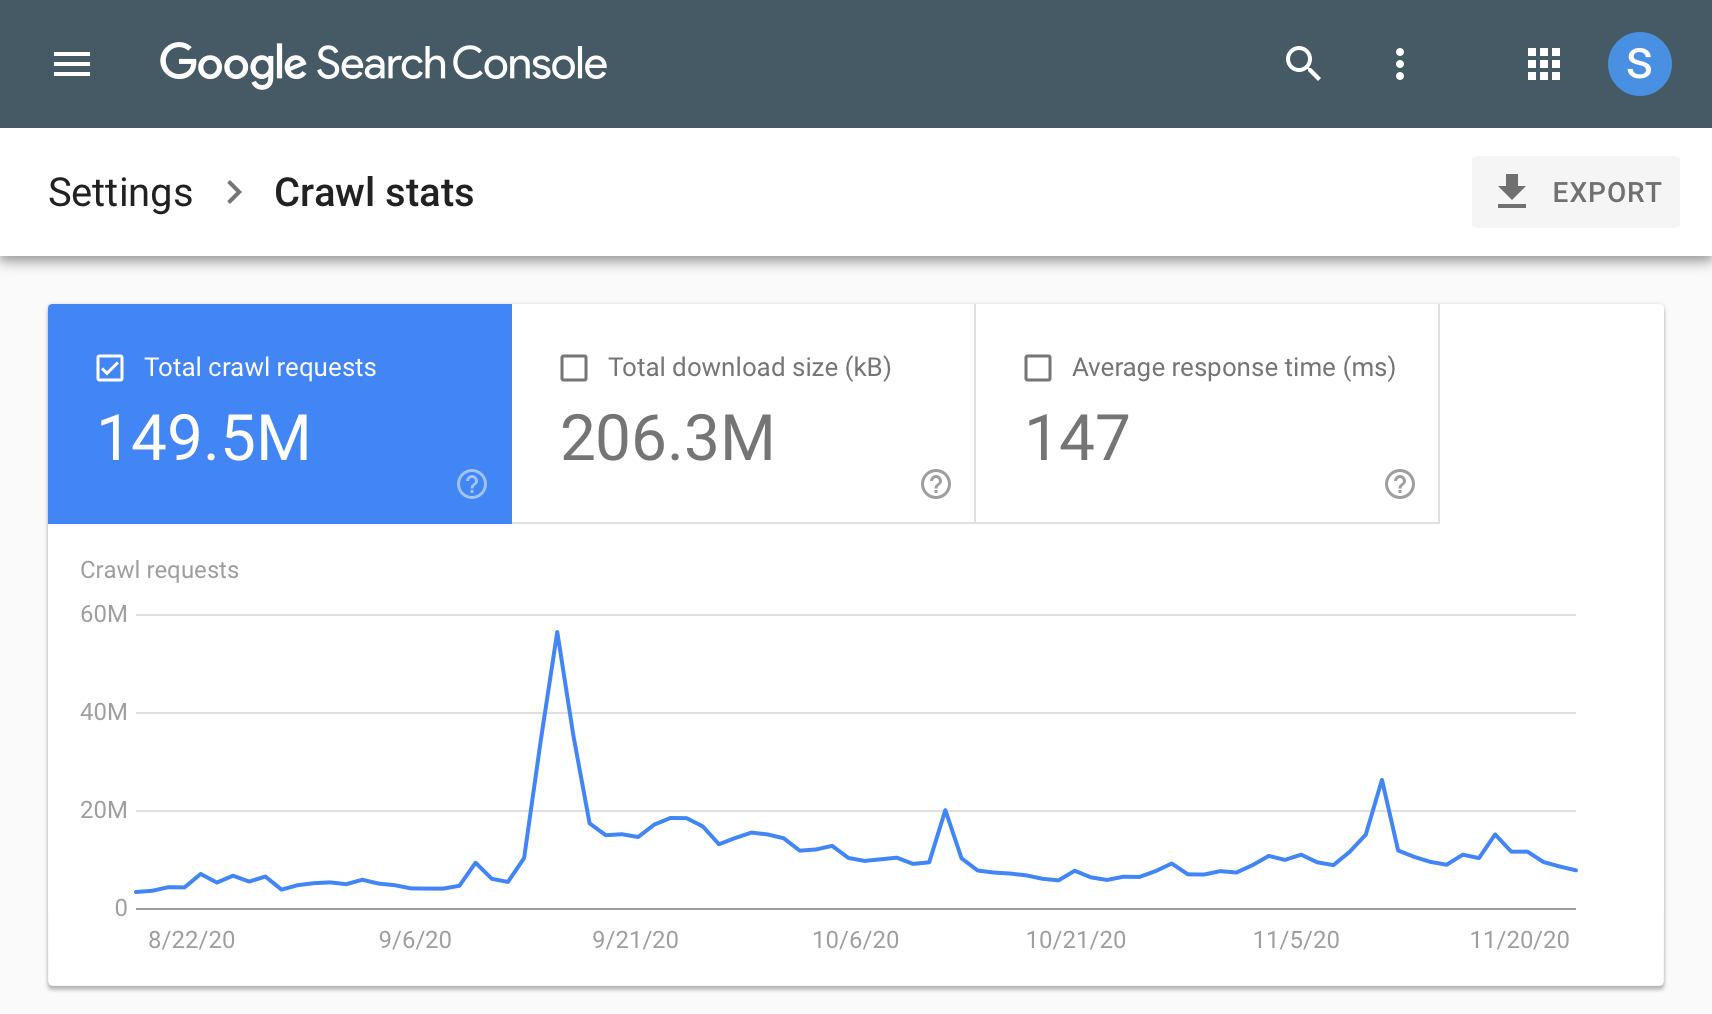 Gráficos de estatísticas de rastreamento do Search Console ao longo do tempo